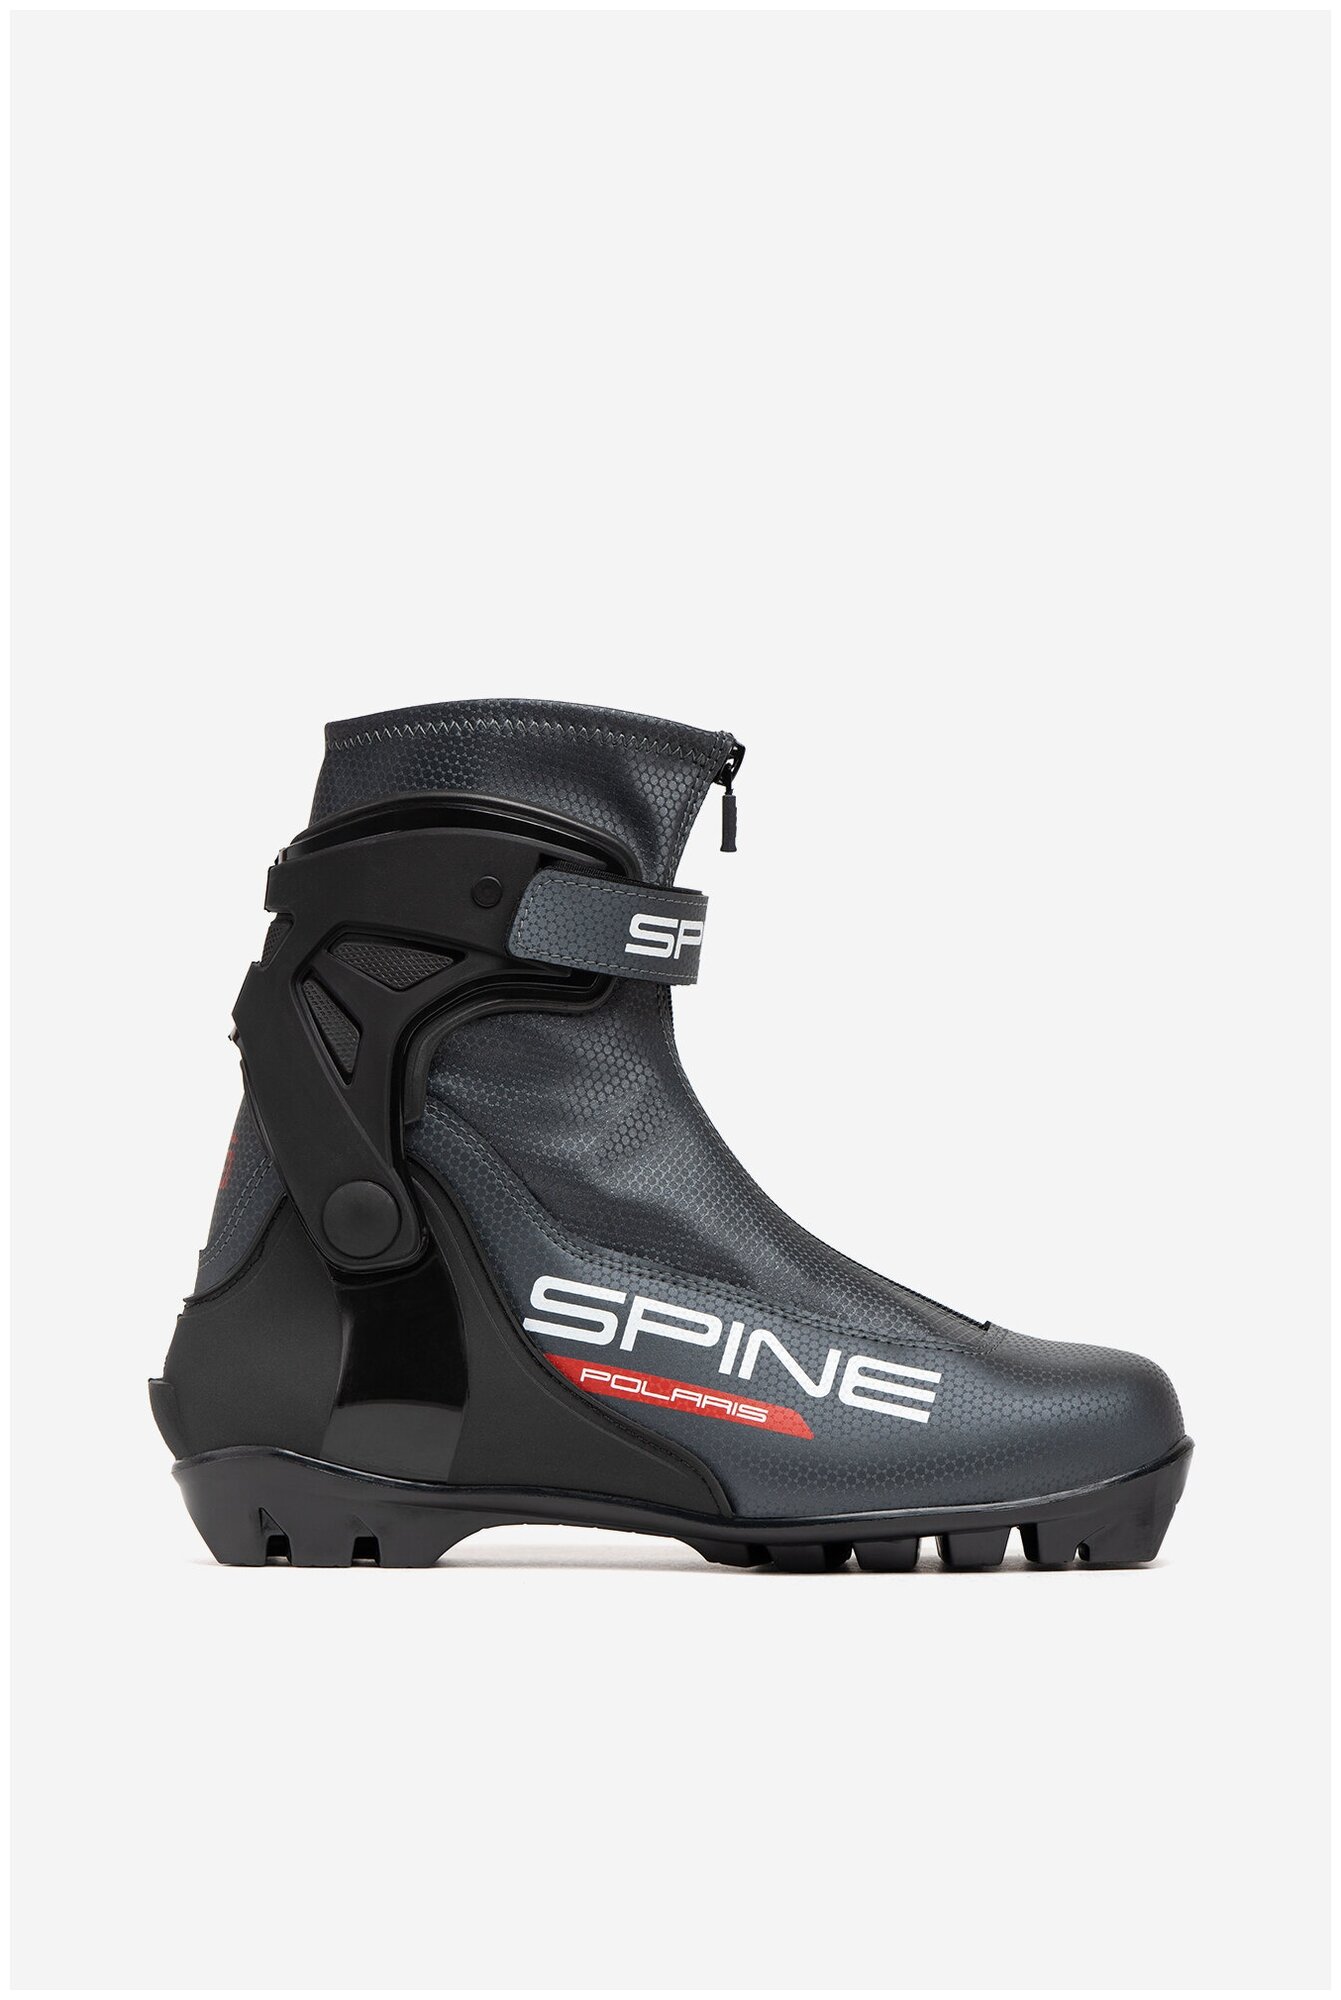 Лыжные ботинки Spine Polaris 85-22 NNN (р.40)